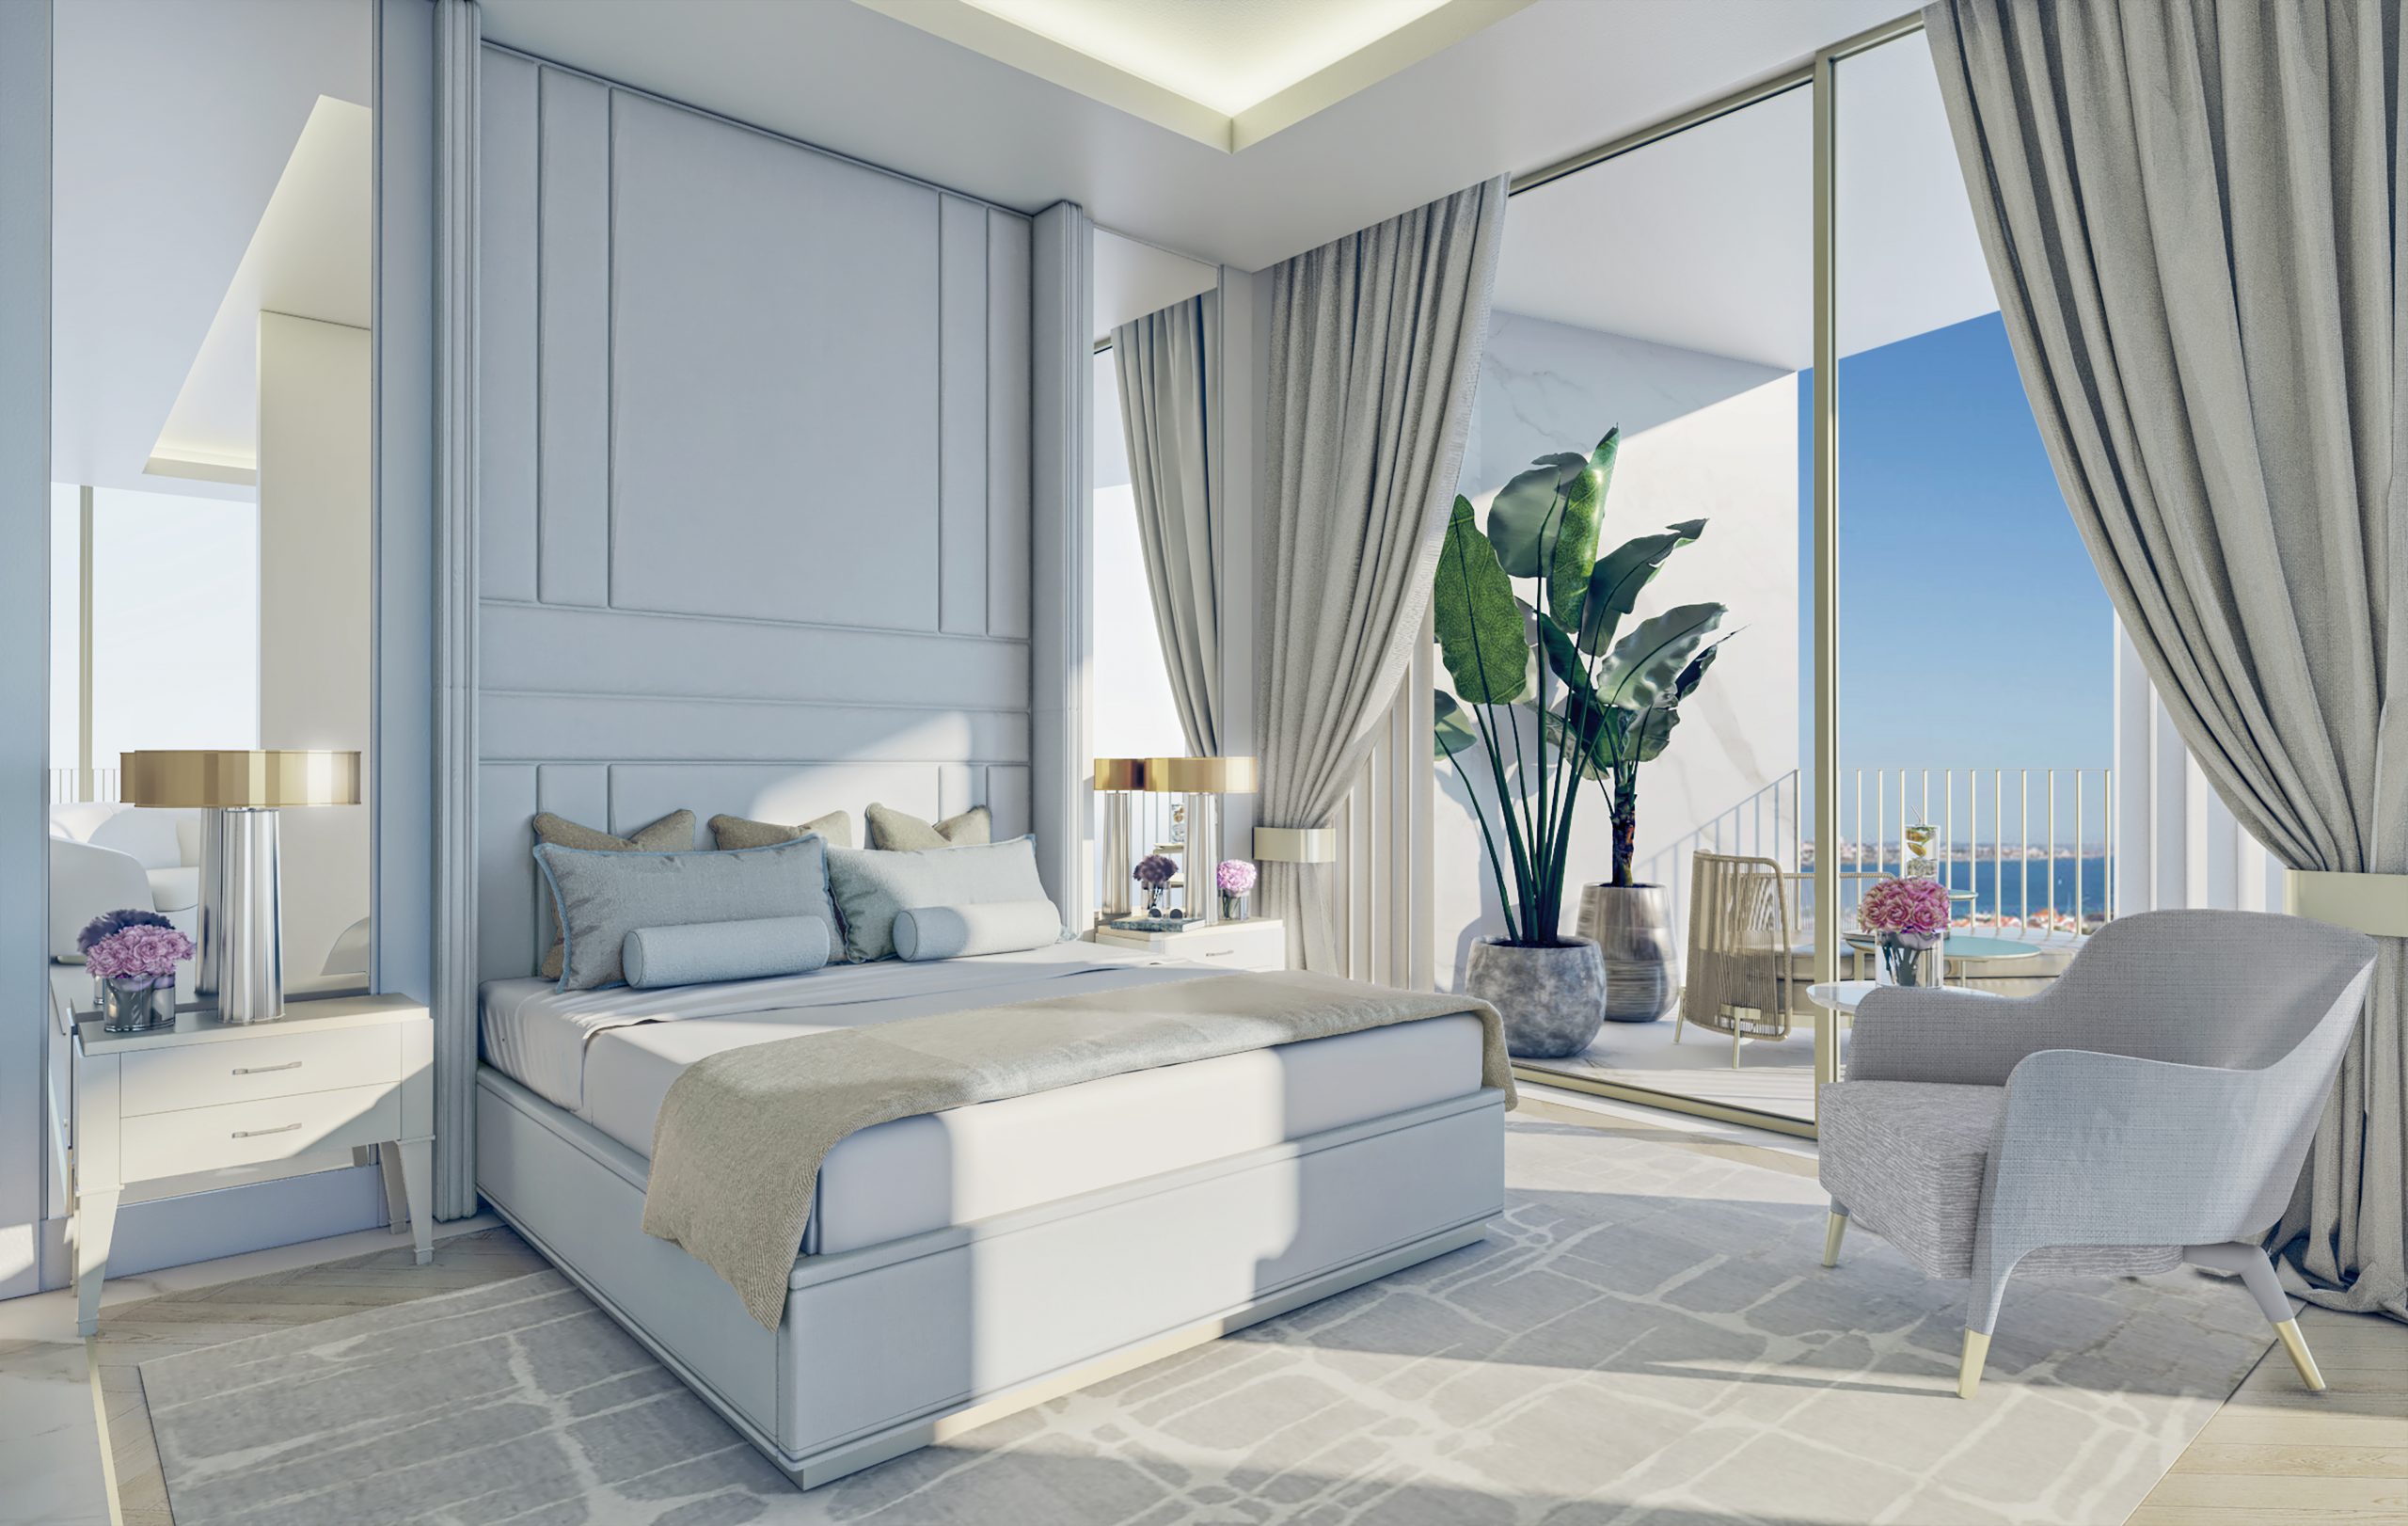 Legacy Residences Master Bedroom By Gavinho Scaled, Design Authority